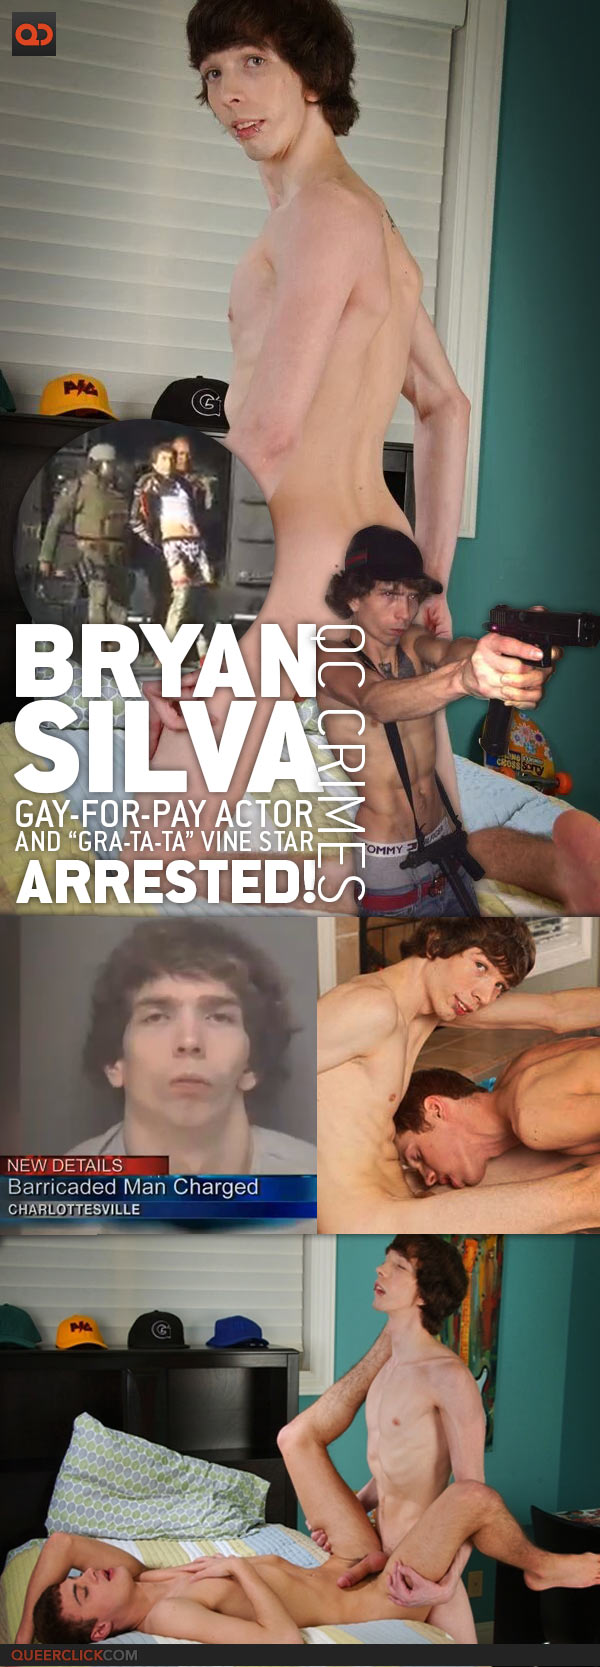 Bryan silva nudes